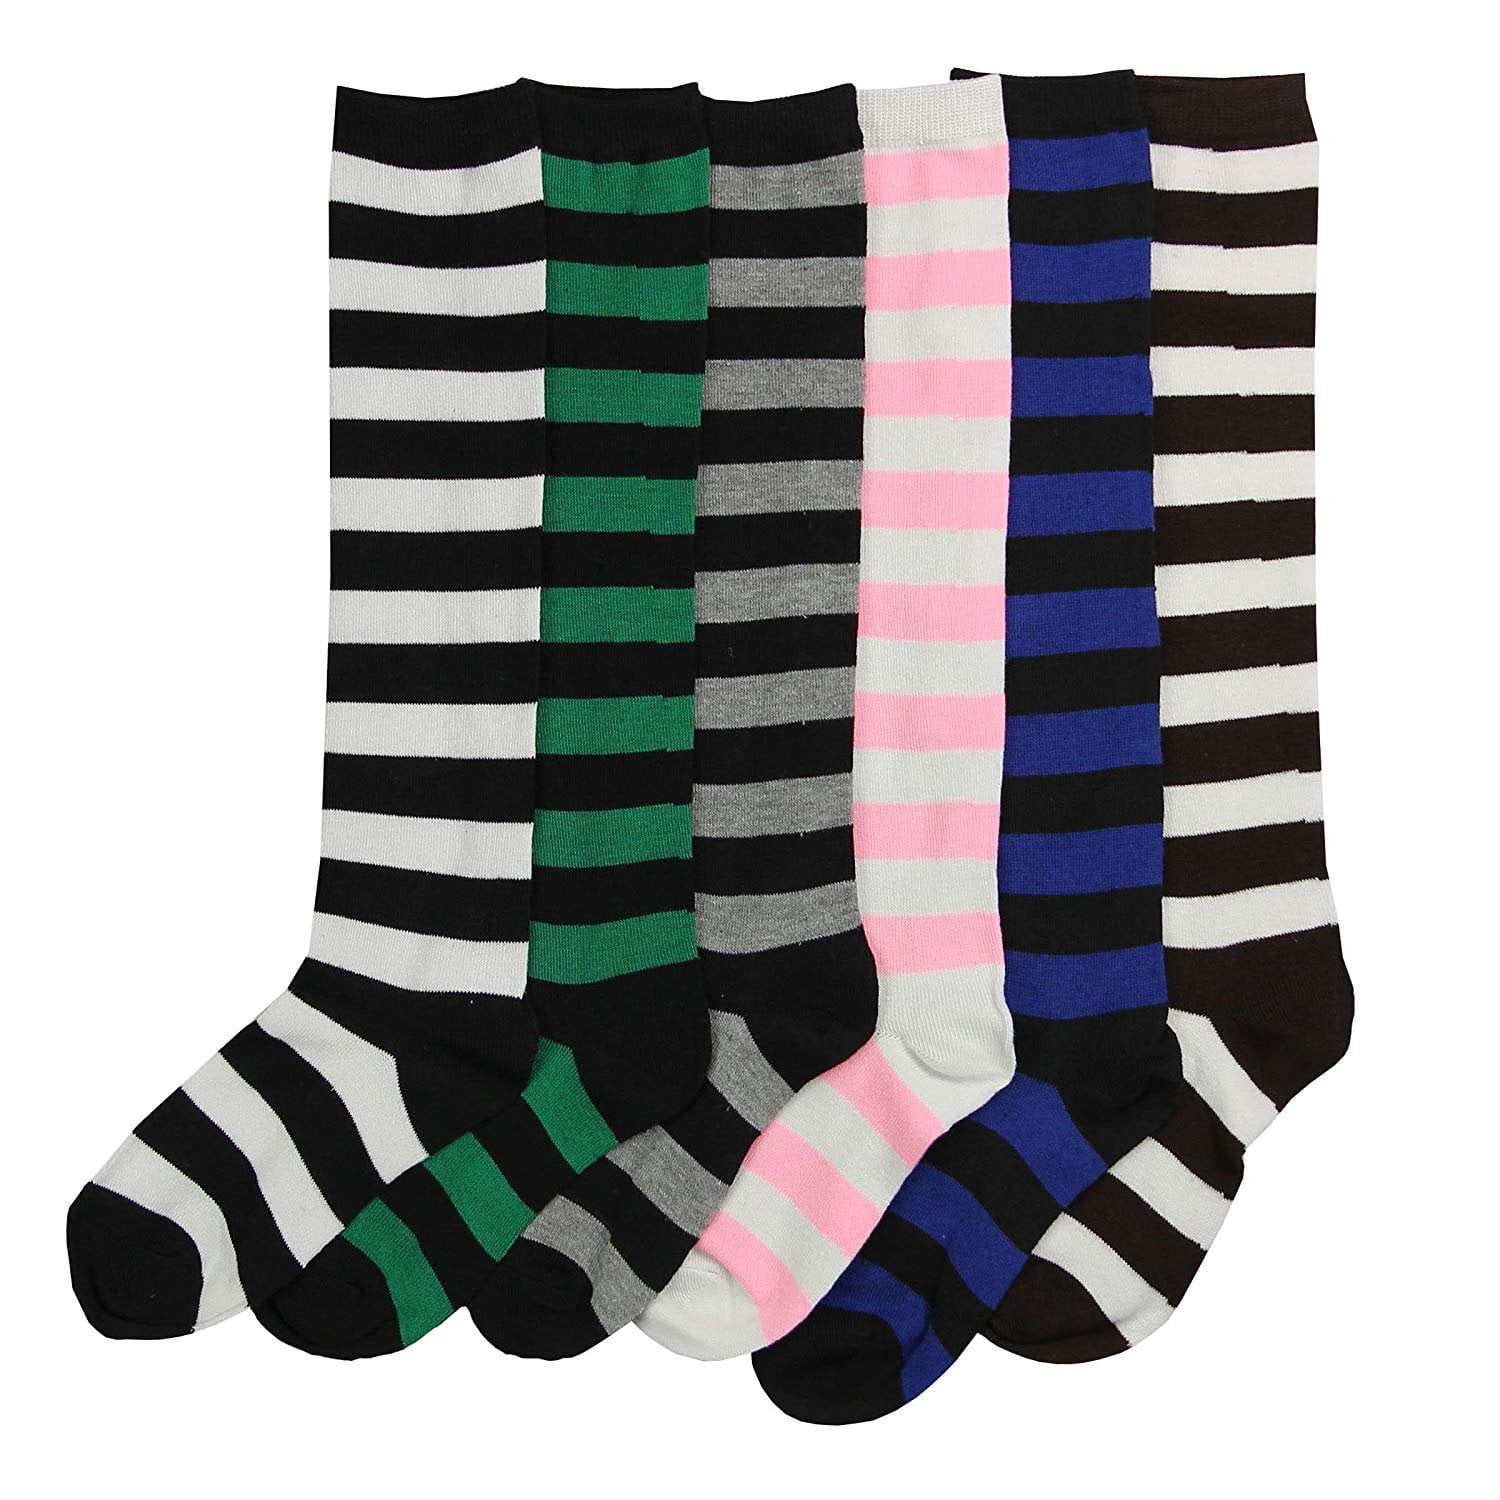 Eros Womens Colorful And Fun Knee High Socks 6 Pack Stripes 1 